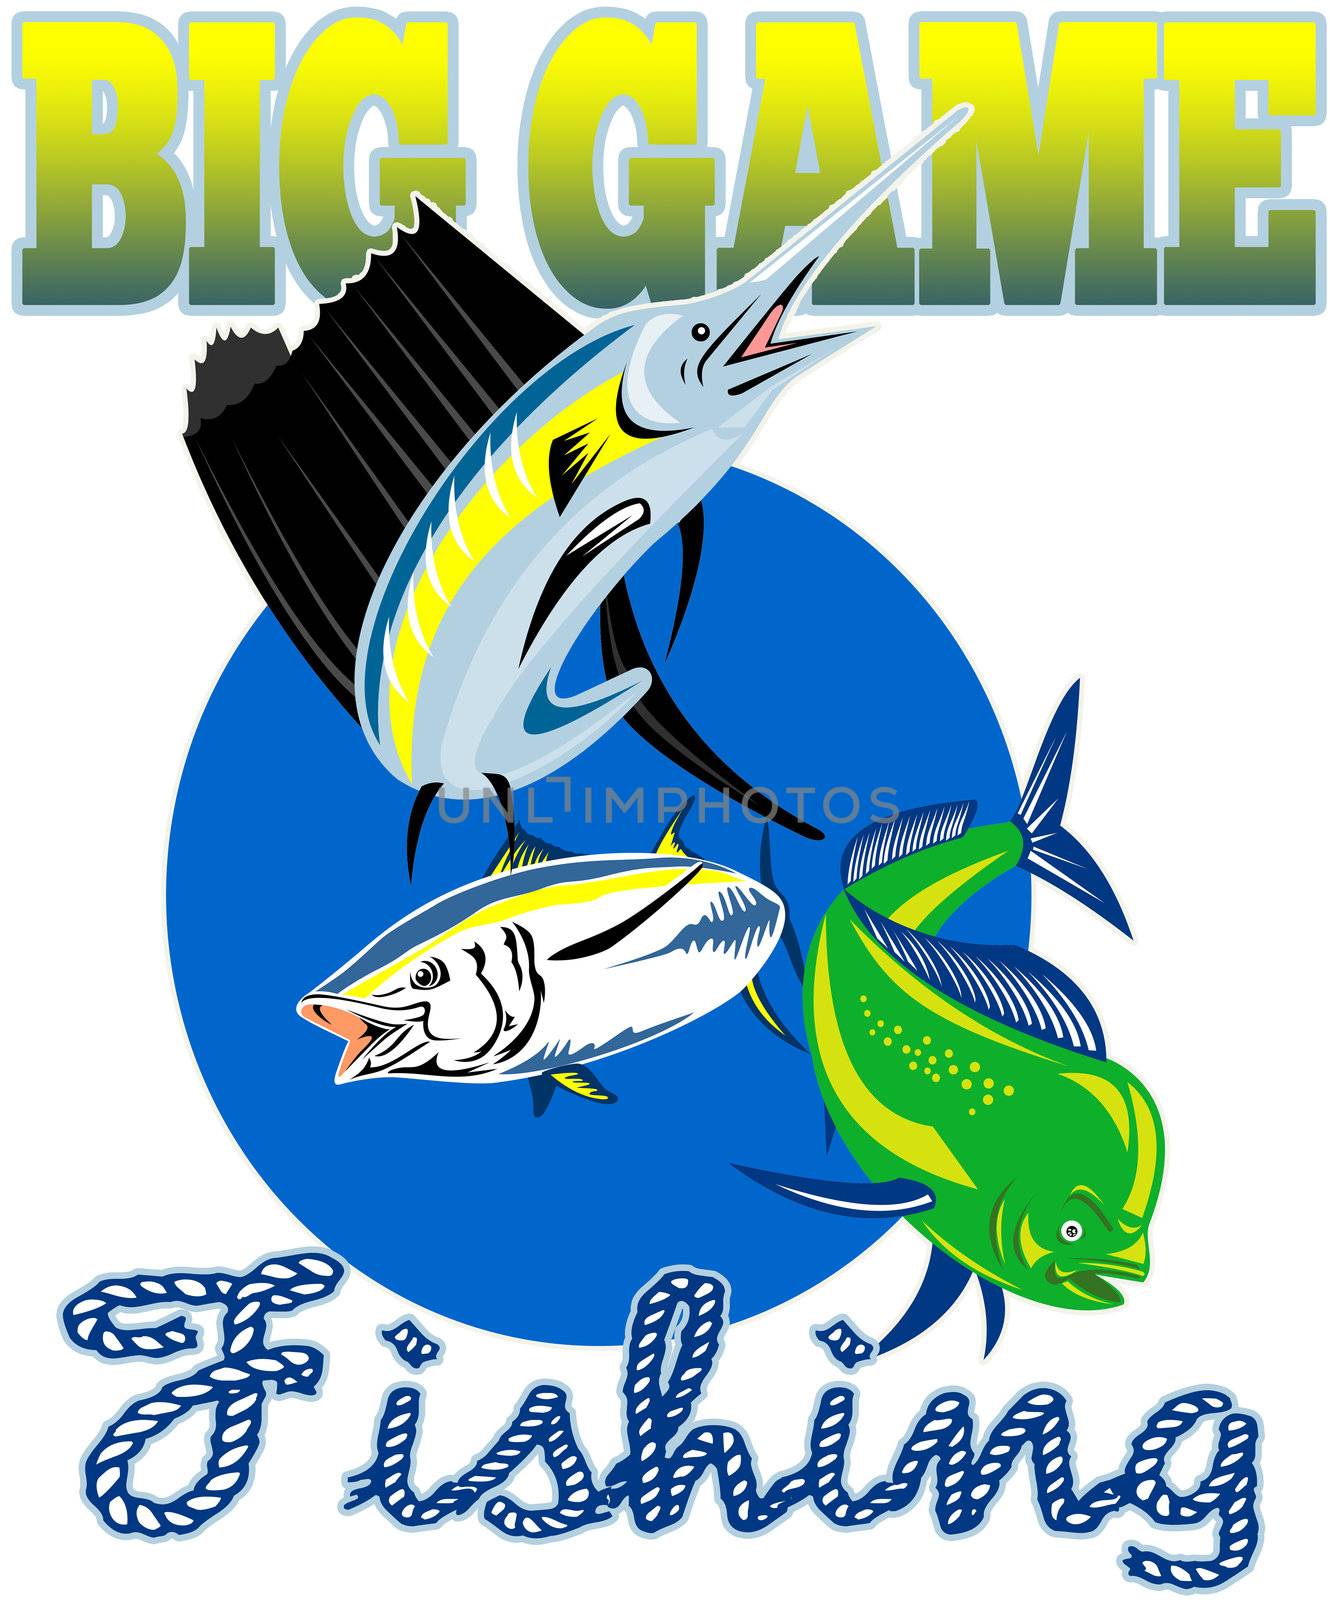 retro style illustration of a Sailfish, dorado dolphin fish or mahi-mahi and yellow fin tuna with words "big game fishing"